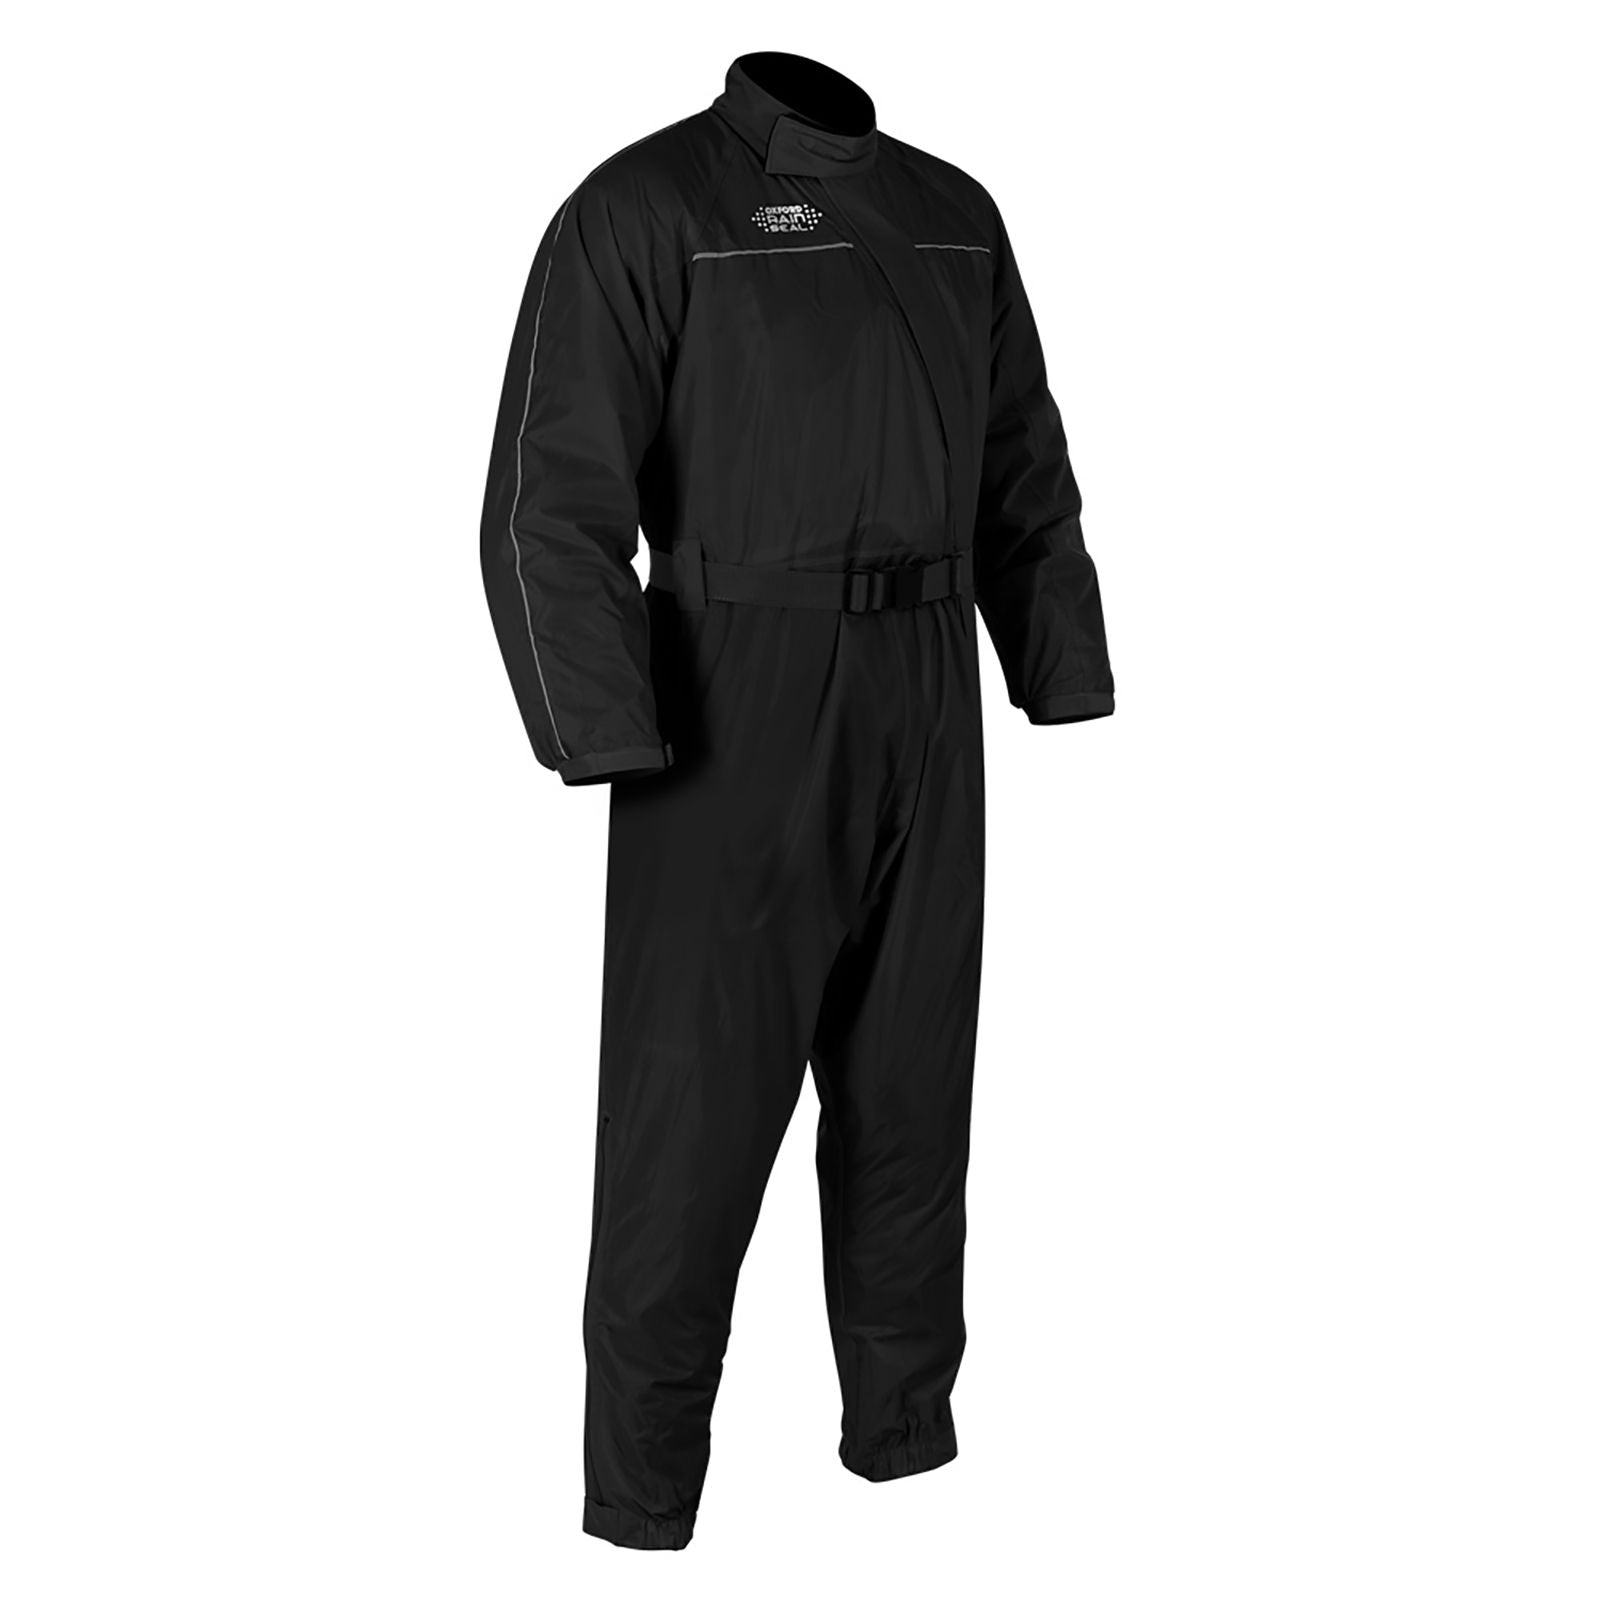 New OXFORD Rainseal Rain Suit - Black - 4XL #OXRM3004XL